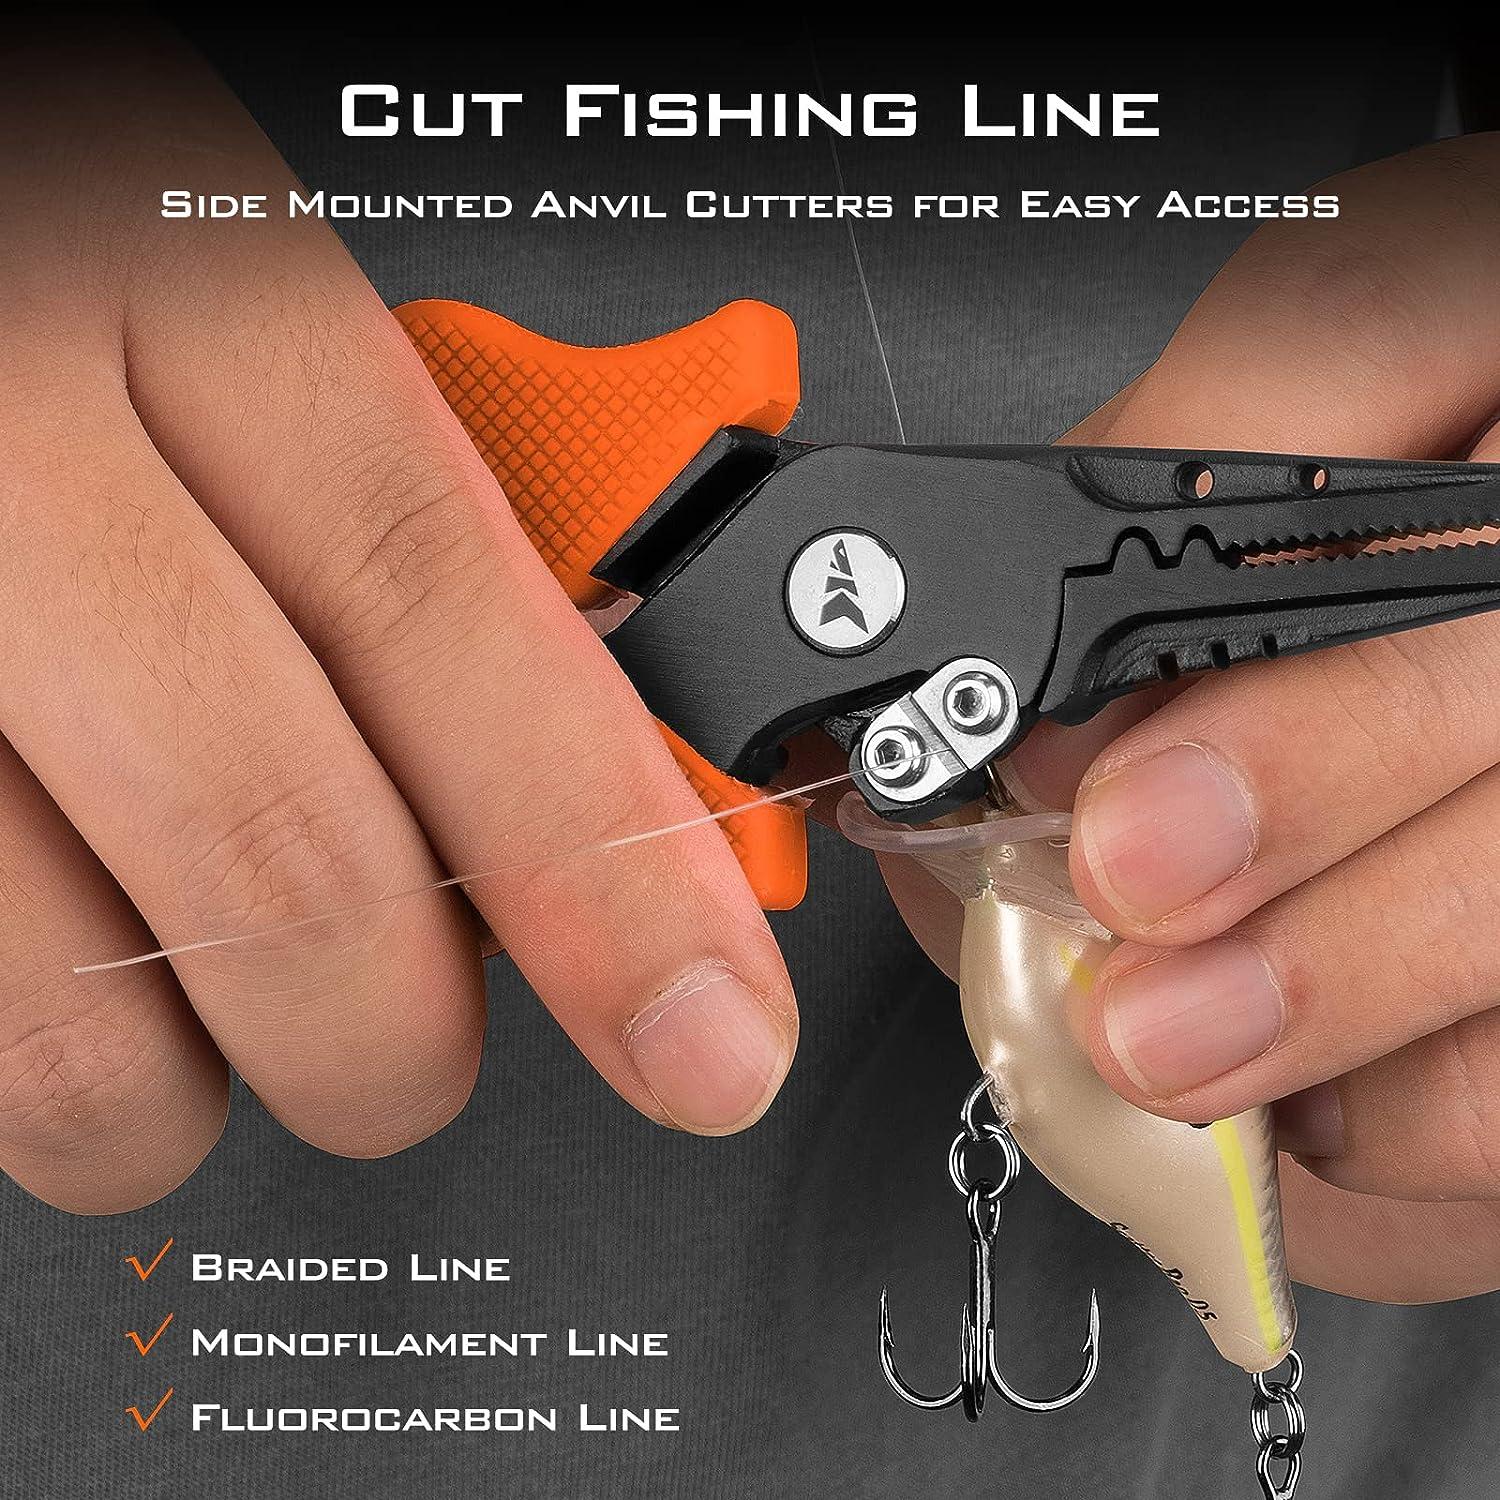 KastKing Cutthroat 7.5- inch Fishing Pliers and 5-inch Braid